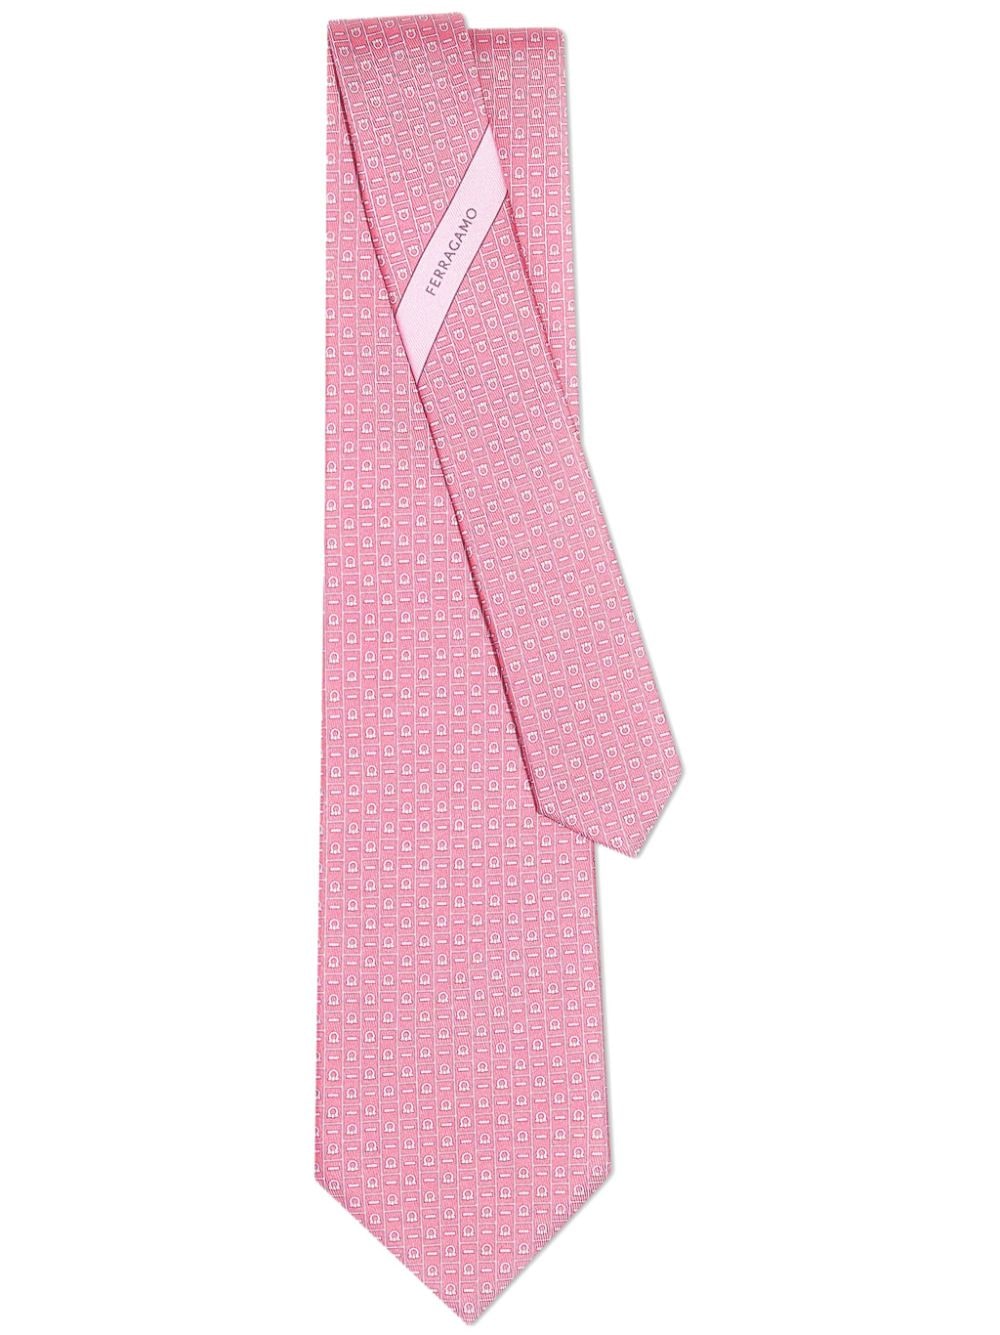 Ferragamo pink Gancini print silk tie von Ferragamo